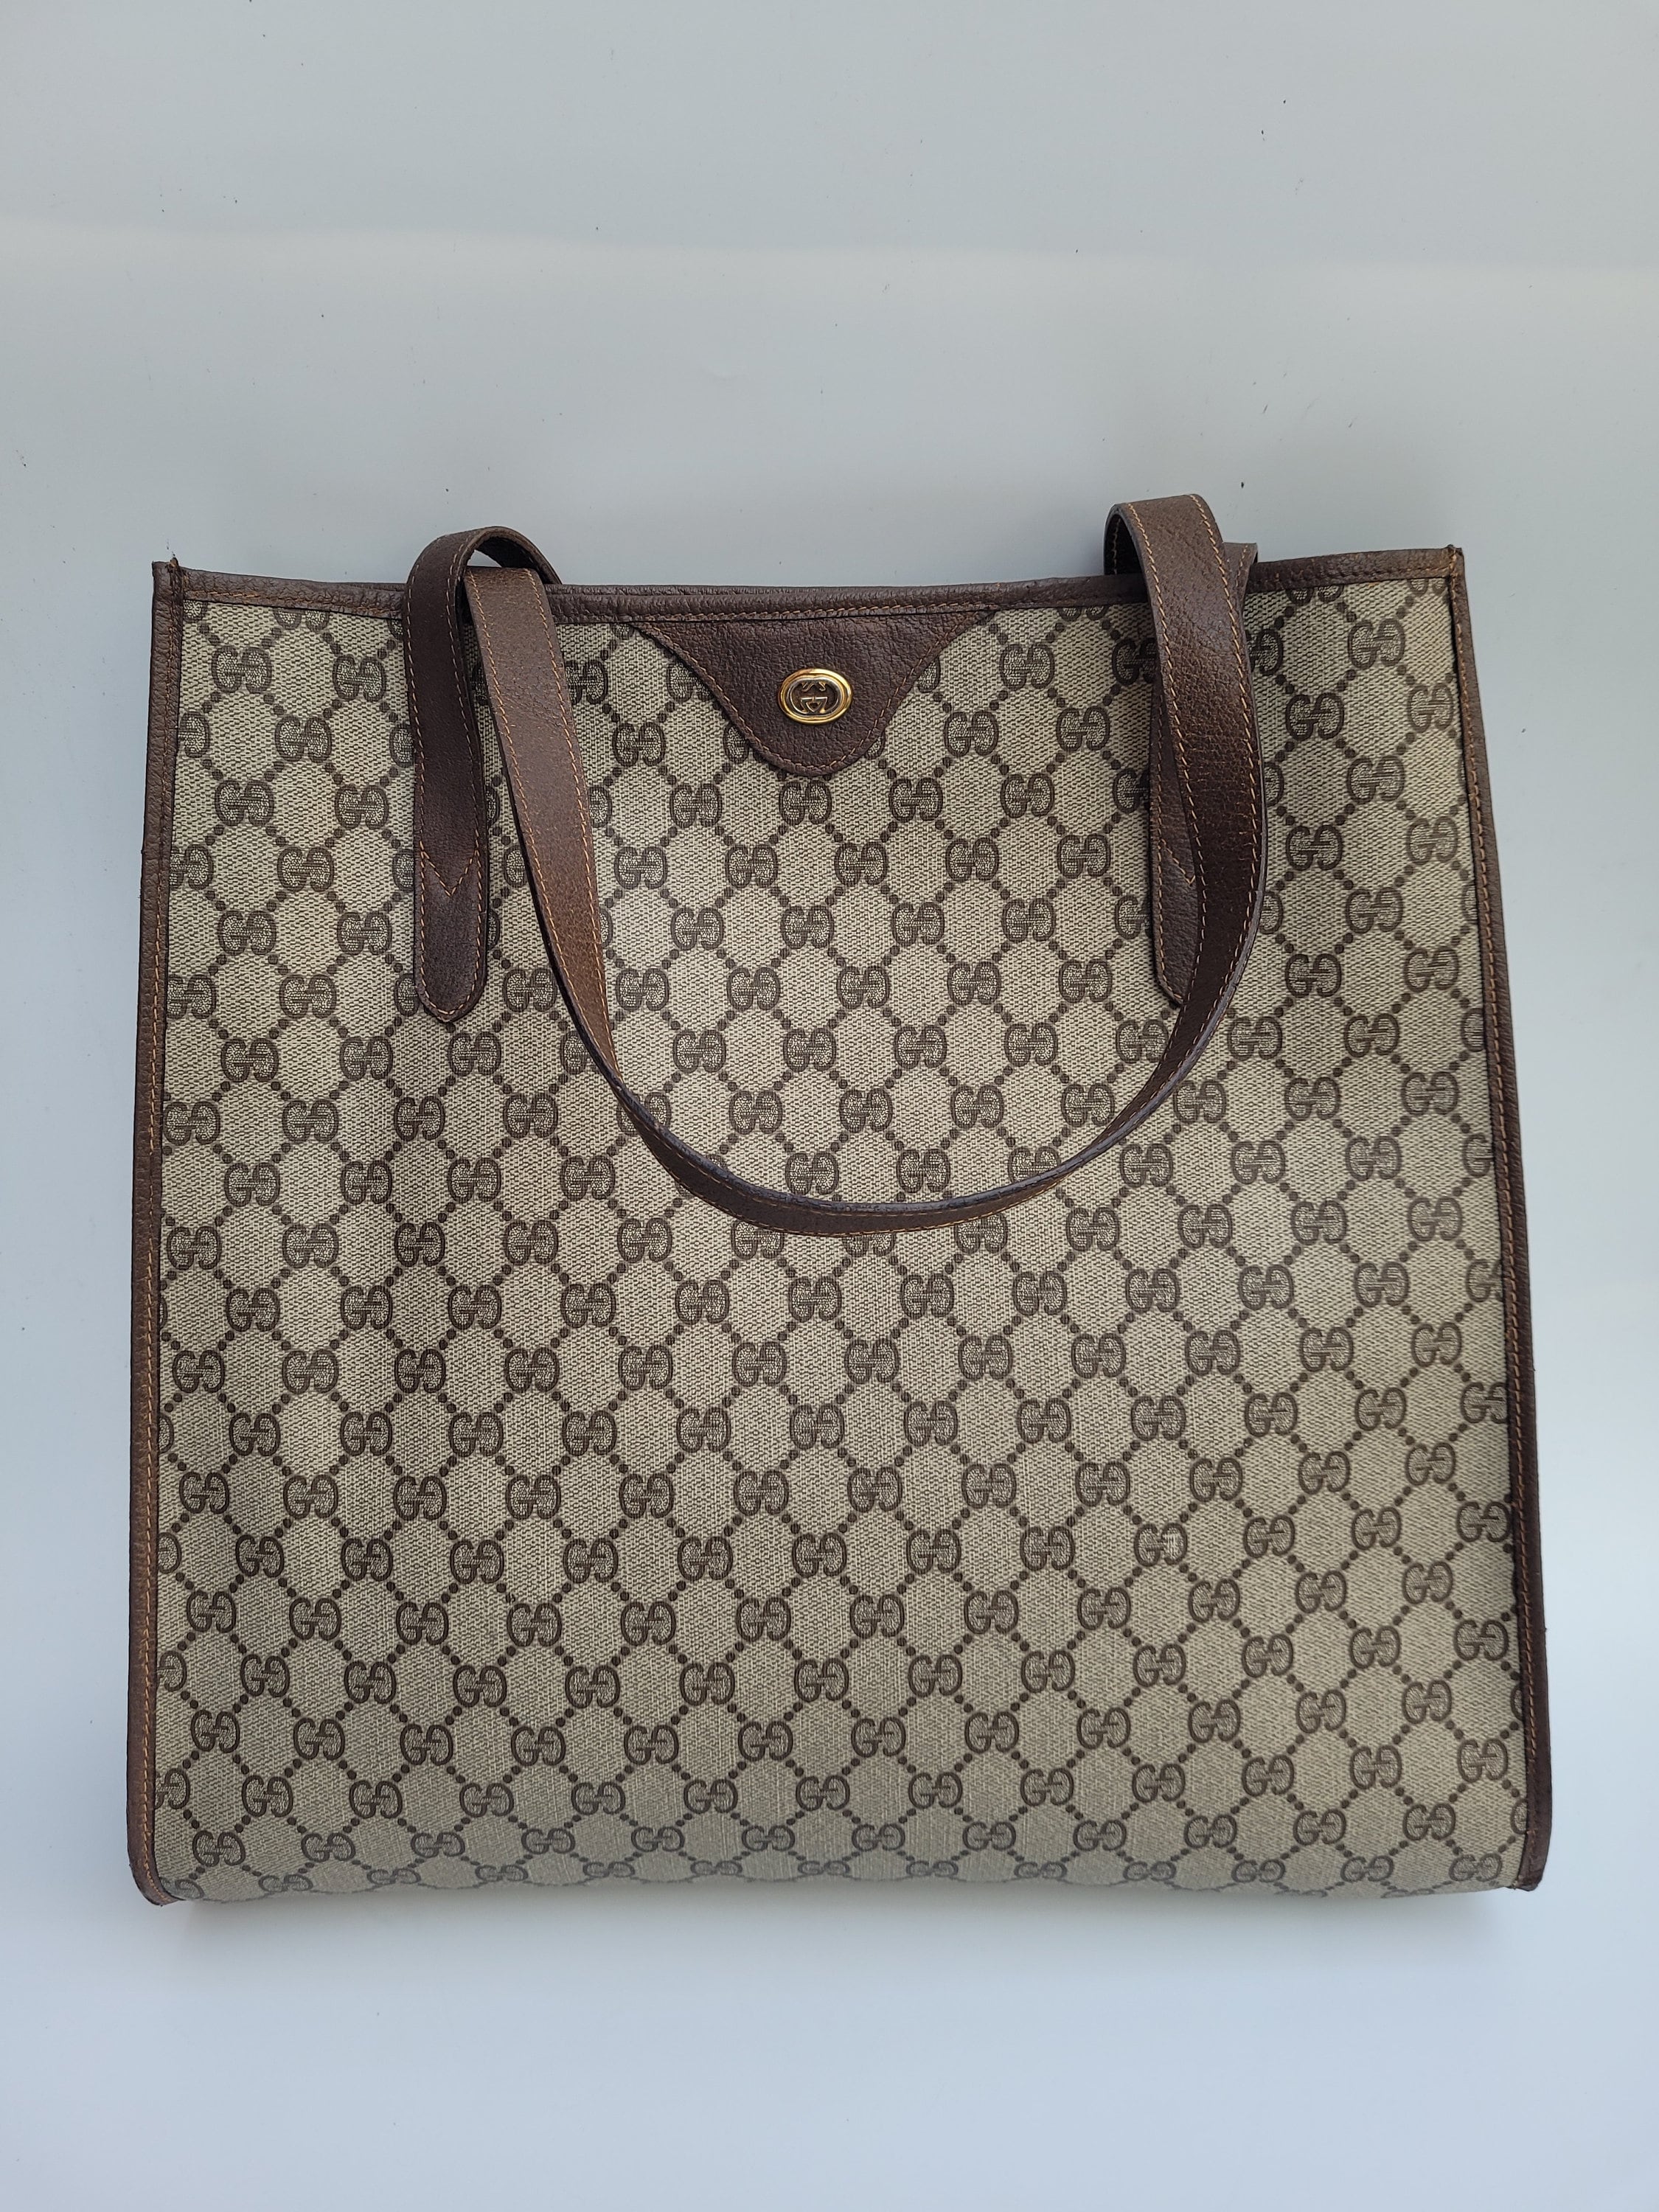 Gucci Black GG Supreme Messenger Bag - Preloved Gucci Handbags Canada